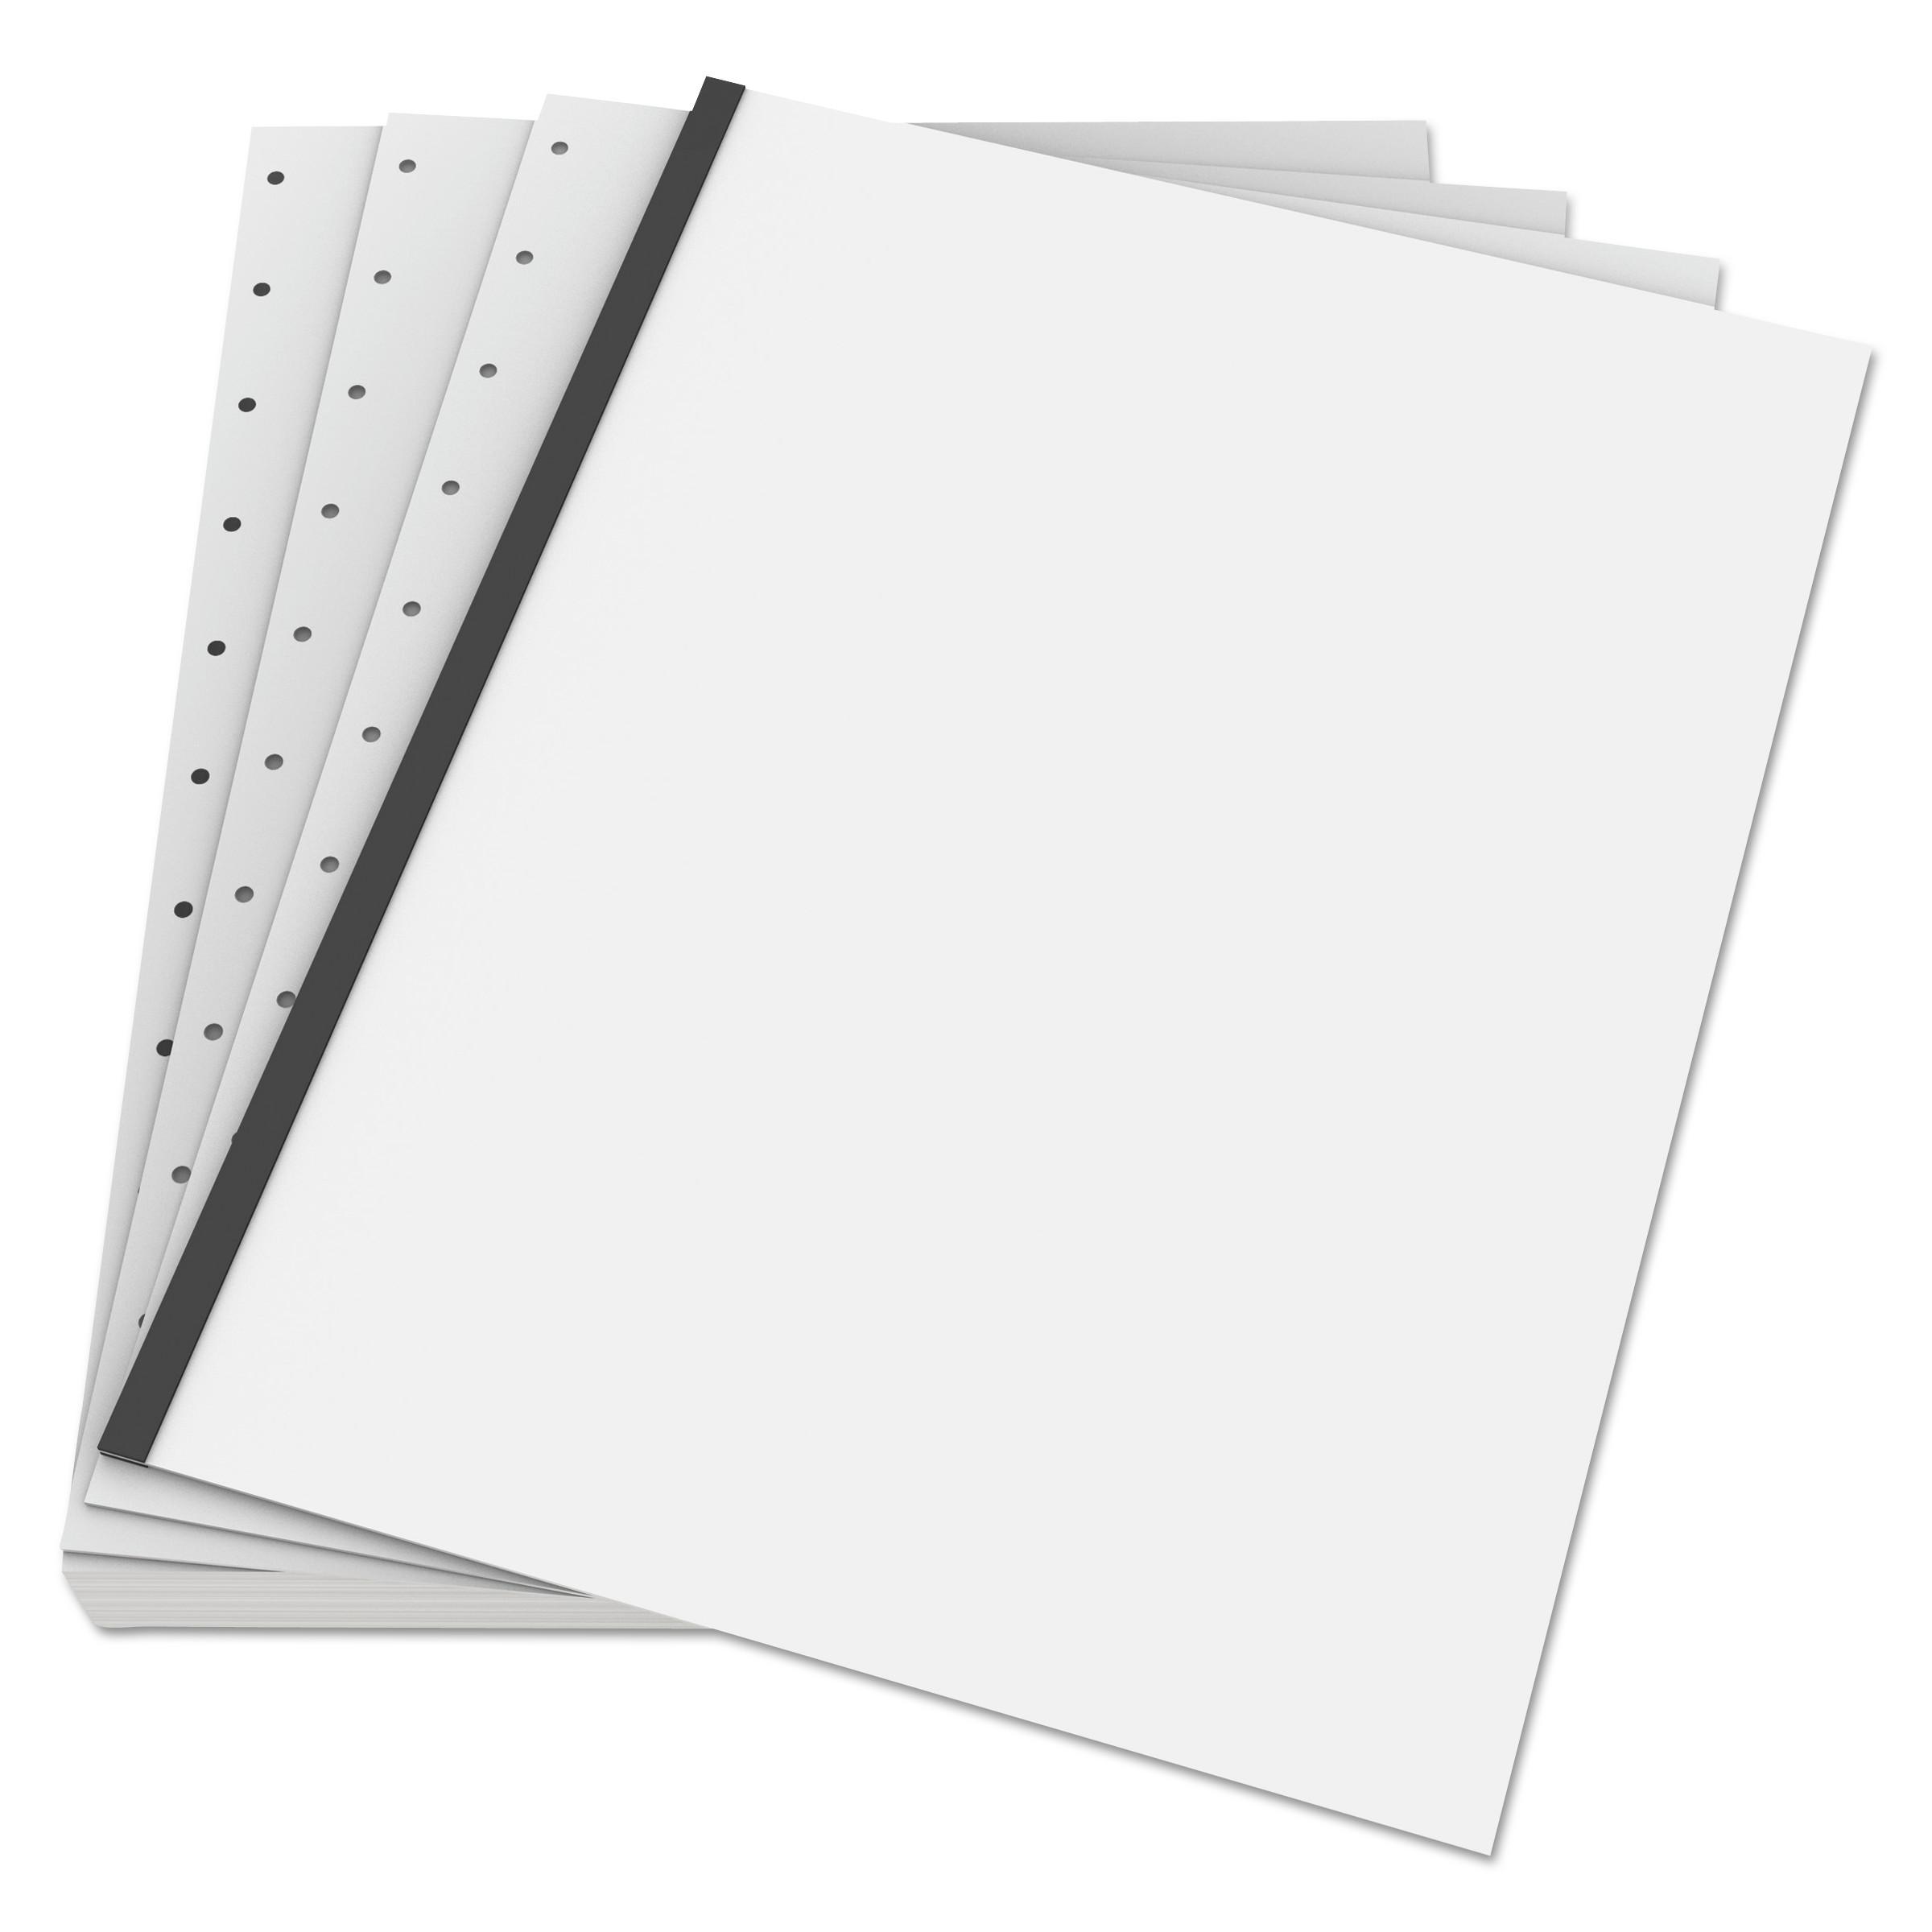  xerox 3R20159 Vitality Multipurpose Paper, 92 Bright, 11-Hole, 20lb, 8.5 x 11, White, 500/Ream (XER3R20159) 